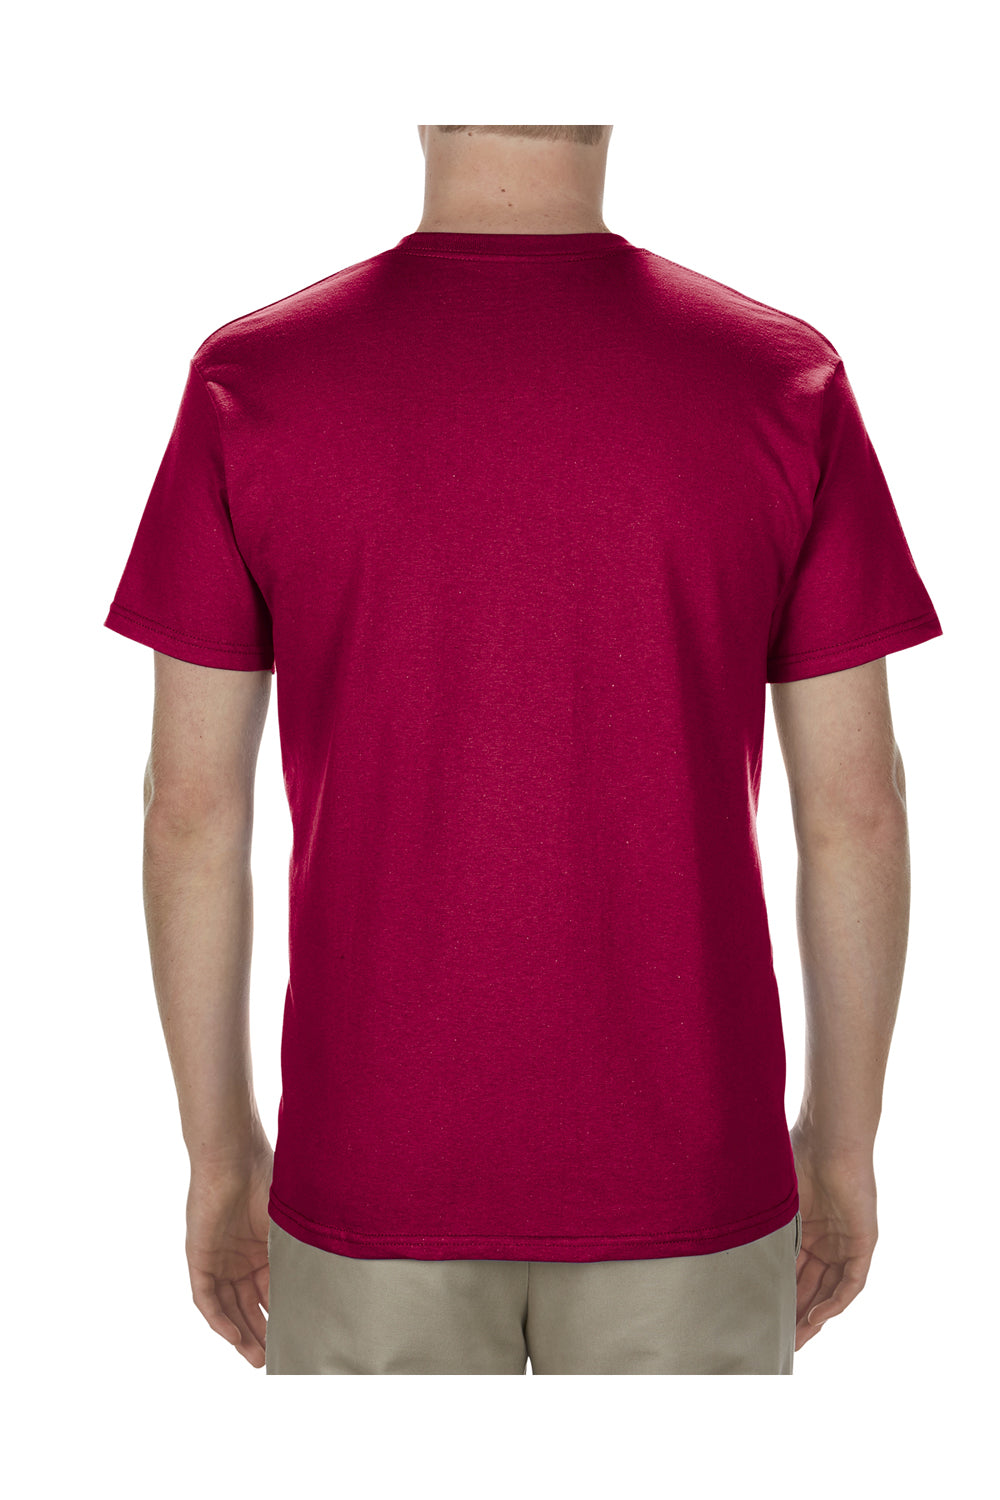 Alstyle AL1701 Mens Soft Spun Short Sleeve Crewneck T-Shirt Cardinal Red Back